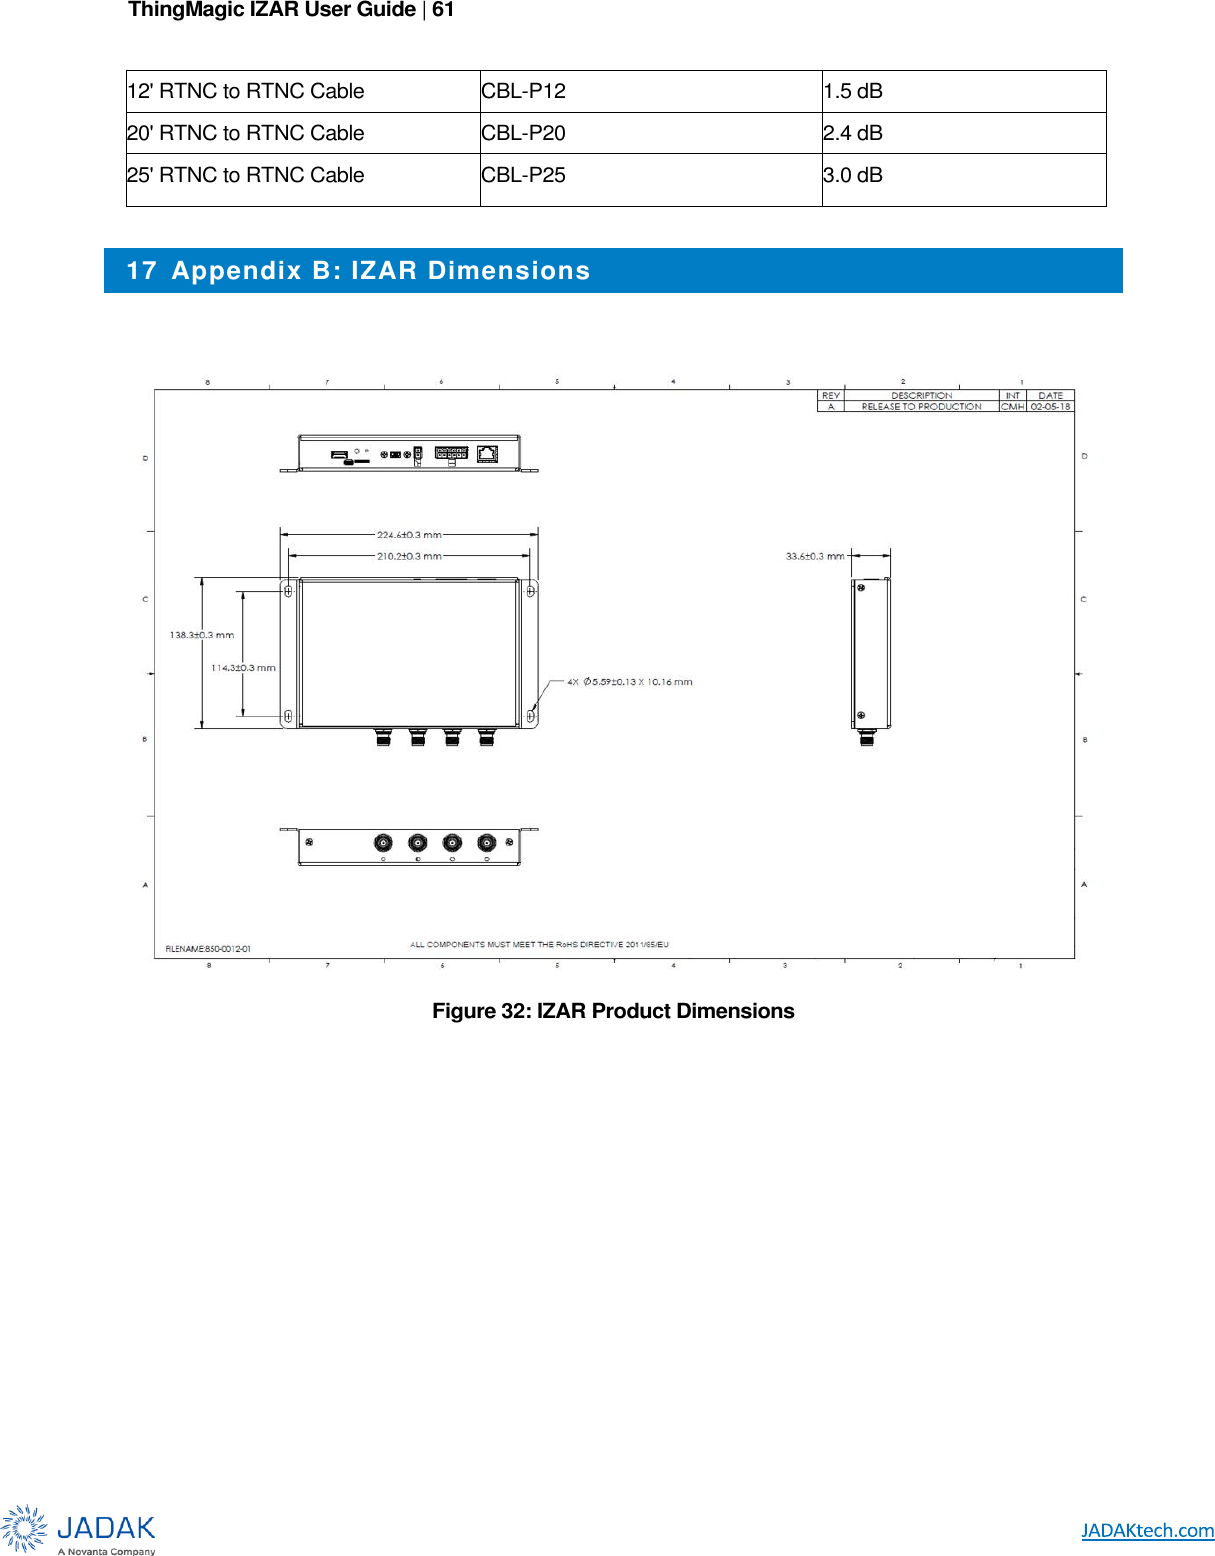 ThingMagic IZAR User Guide | 61      12&apos; RTNC to RTNC Cable CBL-P12 1.5 dB 20&apos; RTNC to RTNC Cable CBL-P20 2.4 dB 25&apos; RTNC to RTNC Cable CBL-P25 3.0 dB  17  Appendix B: IZAR Dimensions    Figure 32: IZAR Product Dimensions               